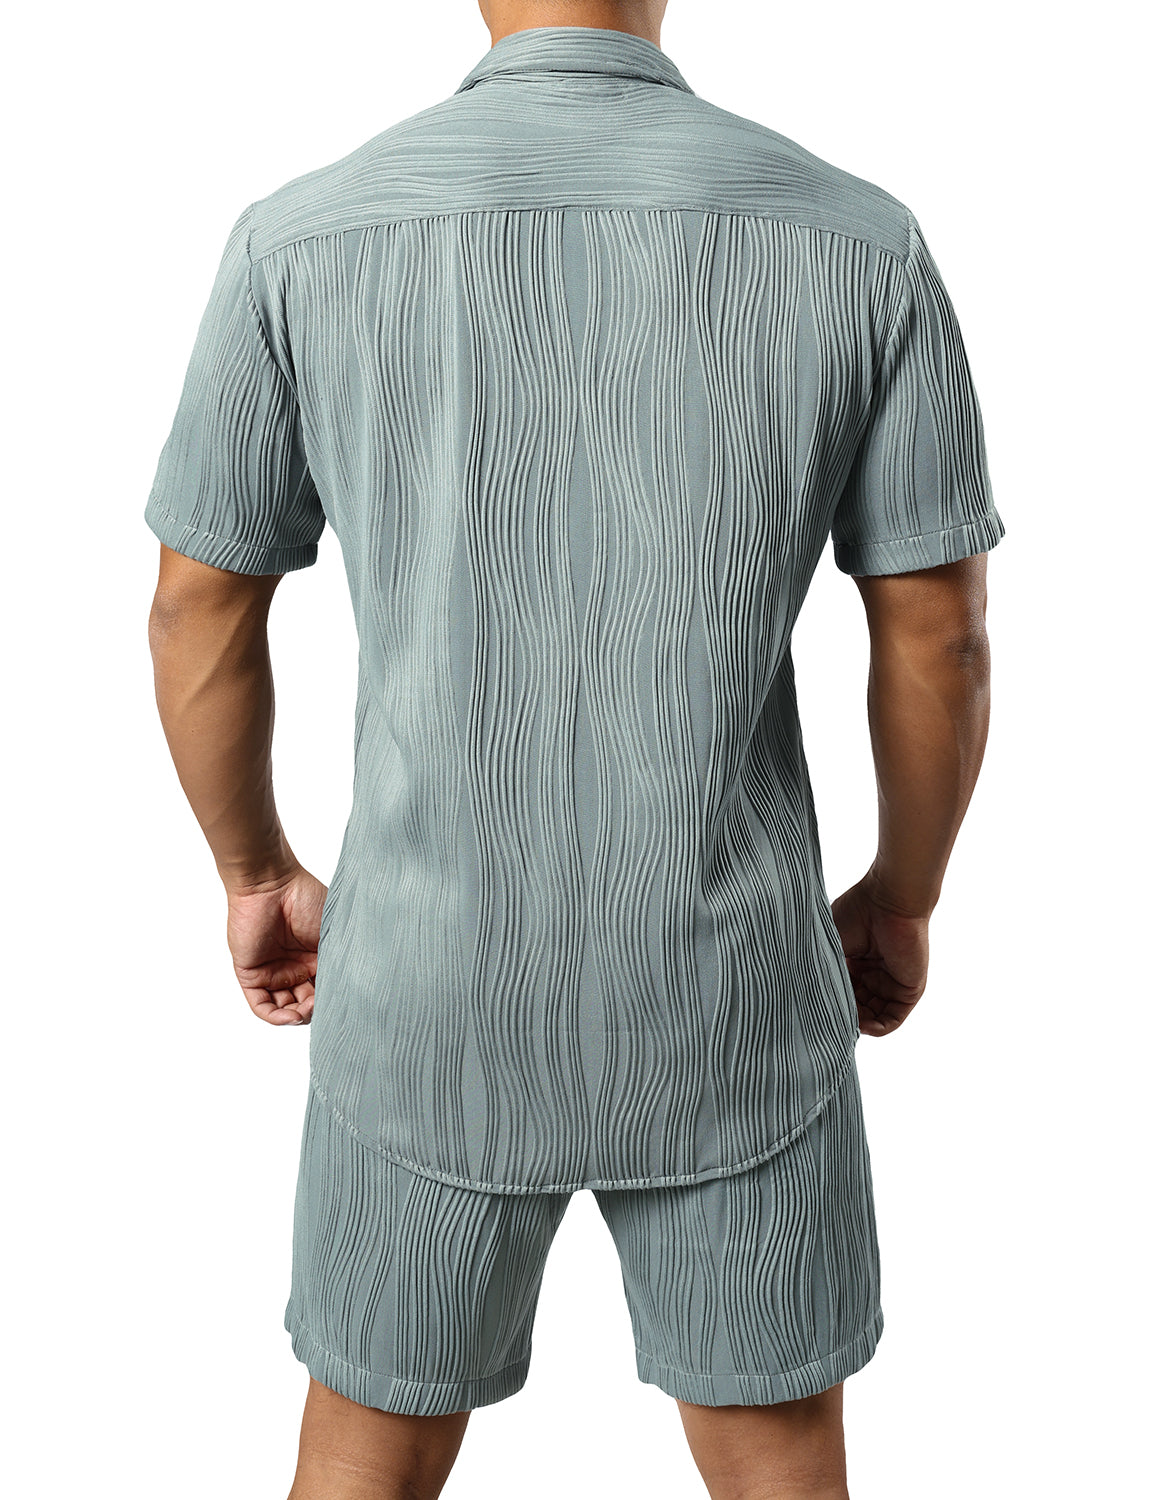 JOGAL Mens 2 Pieces Short Sets Short Sleeve Casual Button Down Shirts Summer Beach Outfits